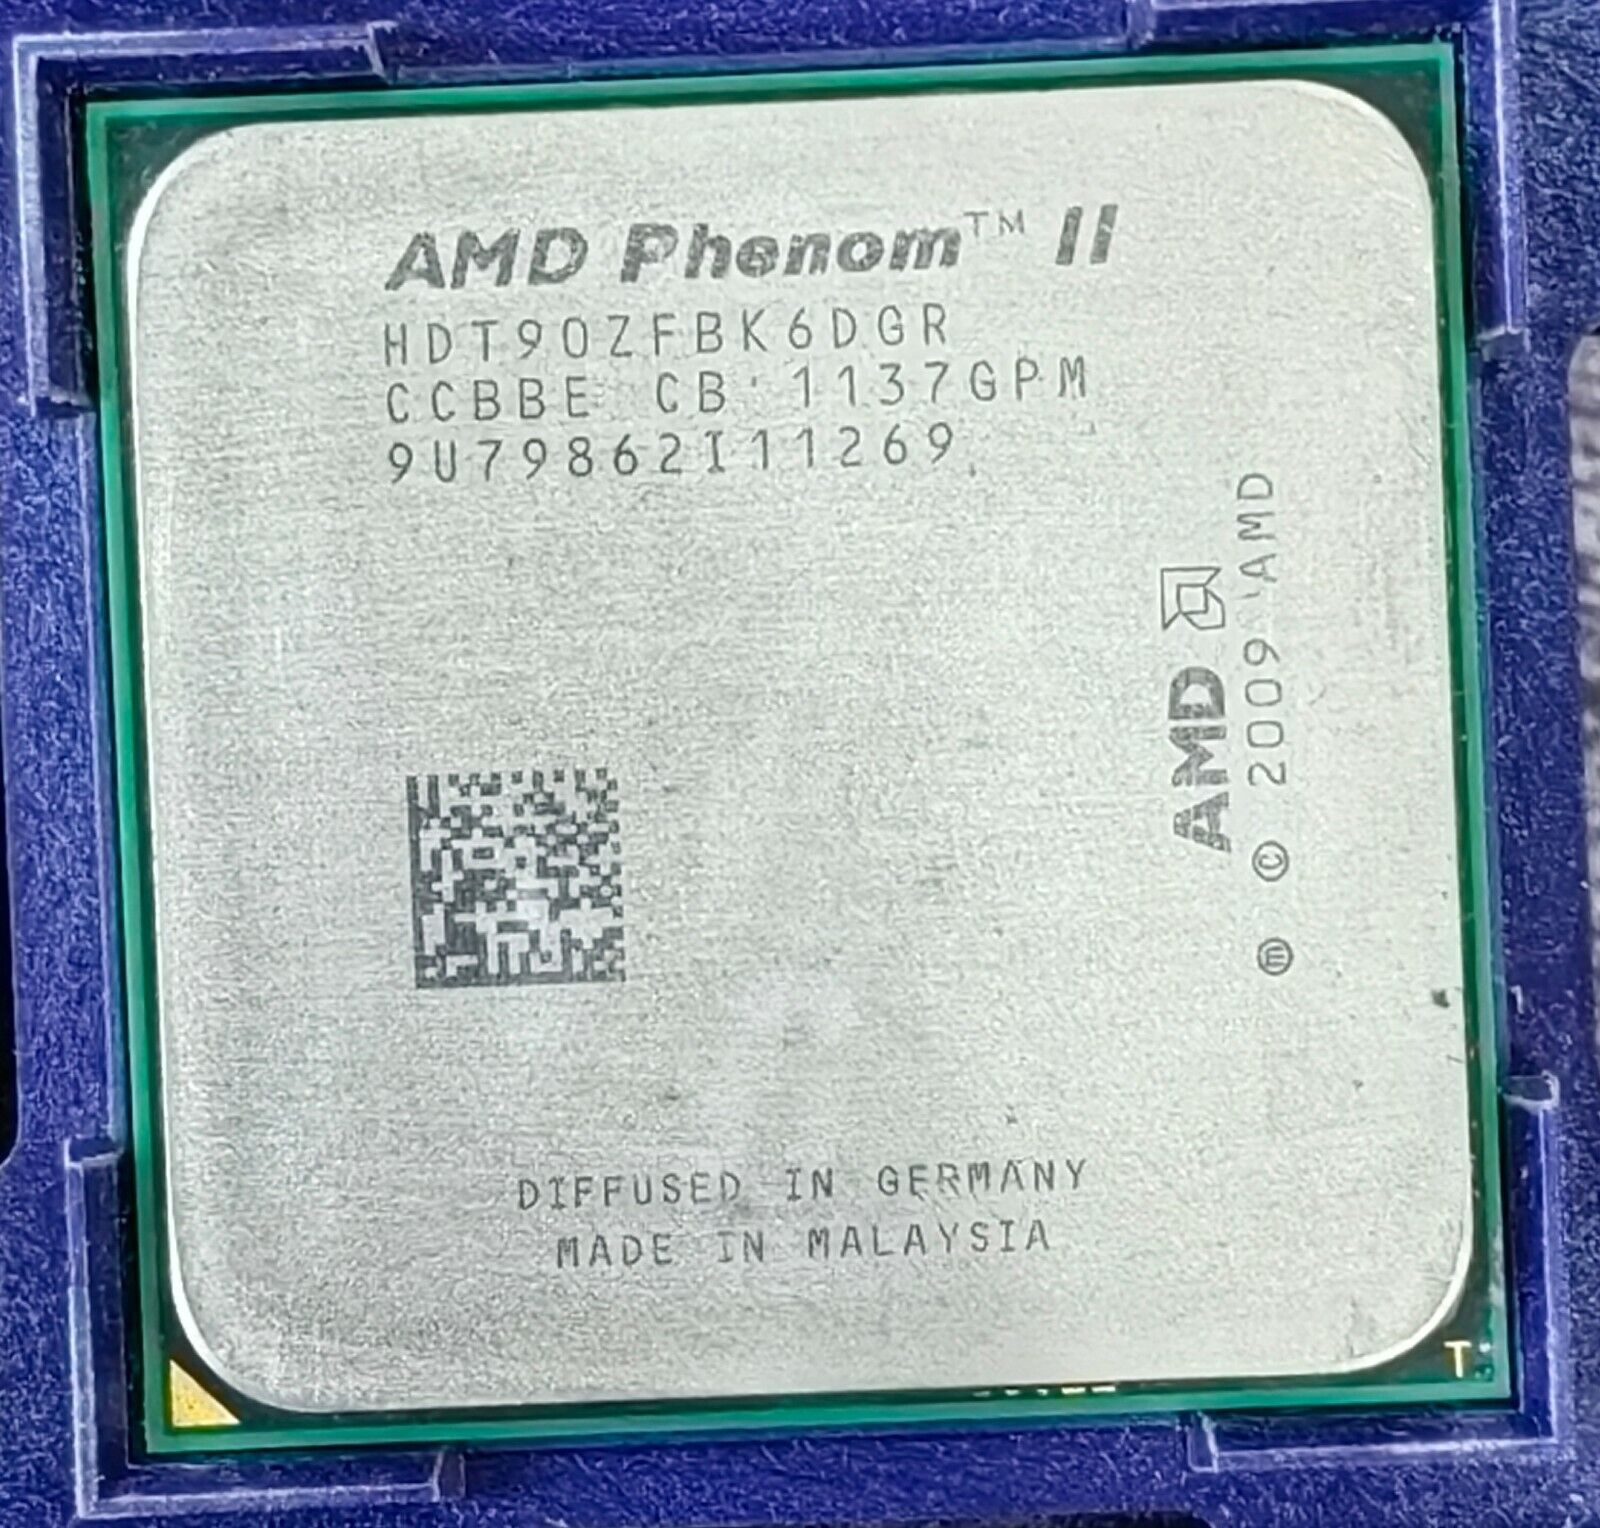  AMD Phenom II X6 1090T Desktop CPU Black Edition - HDT90ZFBK6DGR unlocked 125W